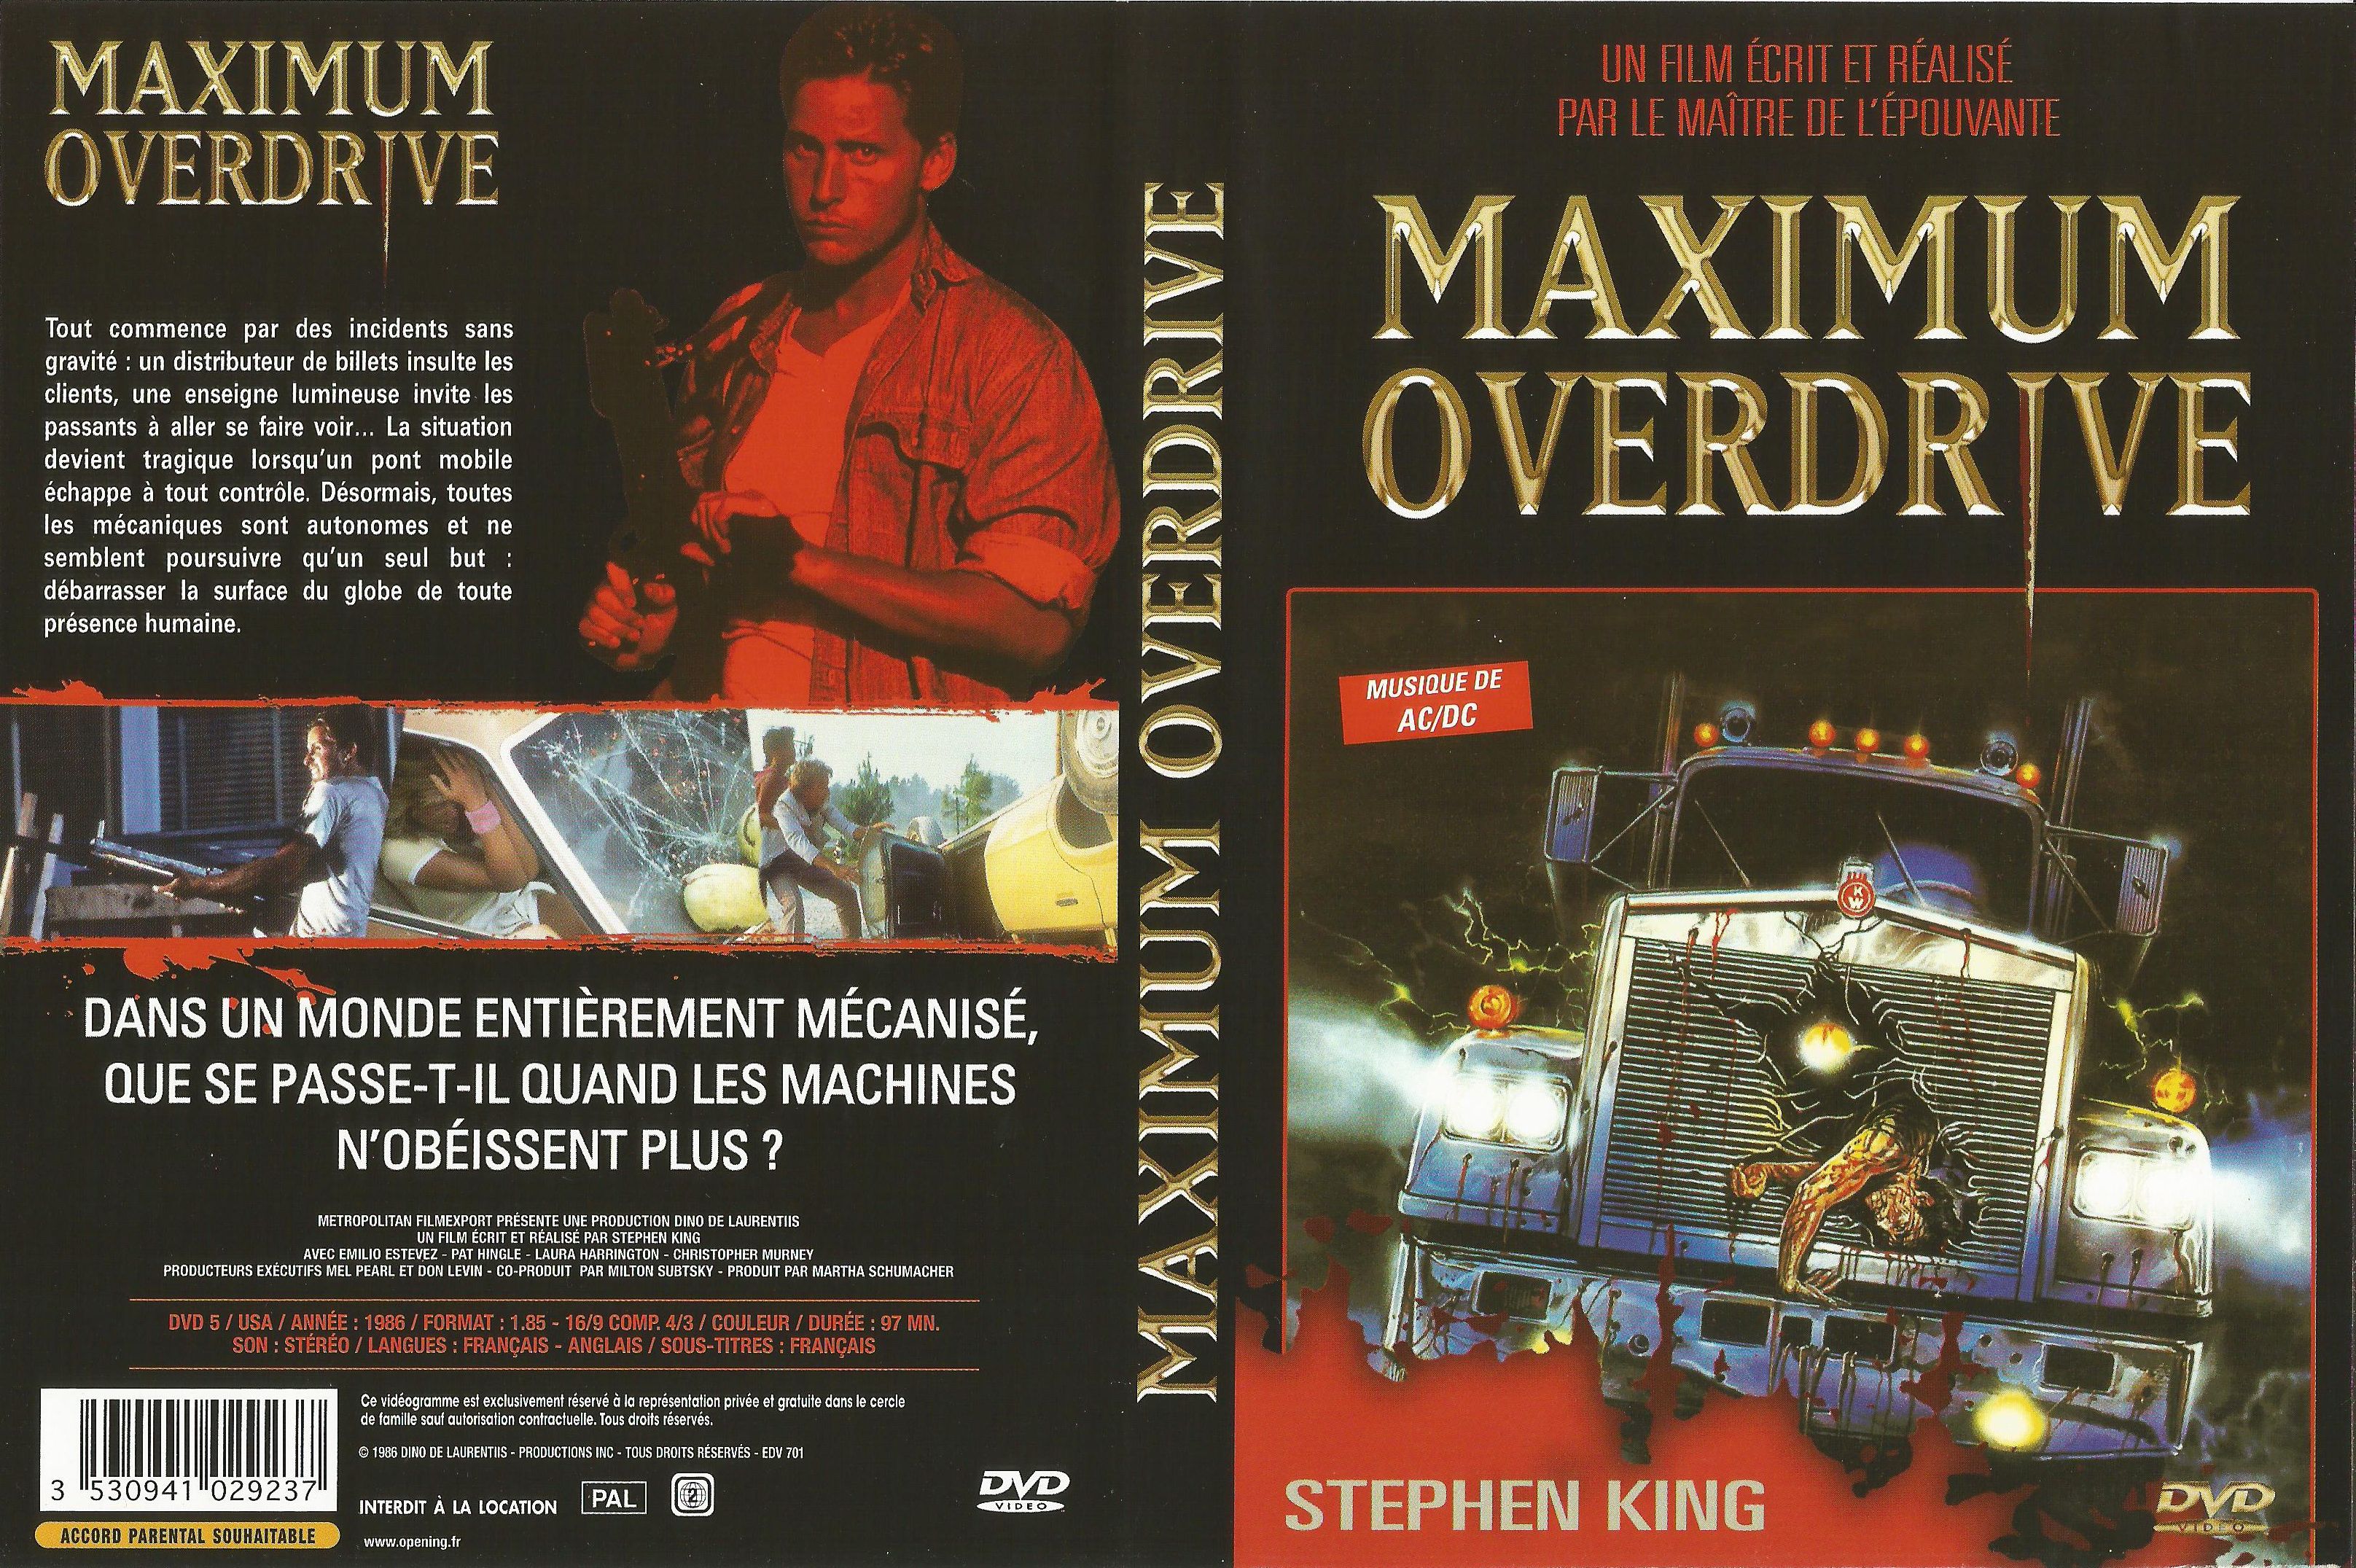 Jaquette DVD Maximum overdrive v4